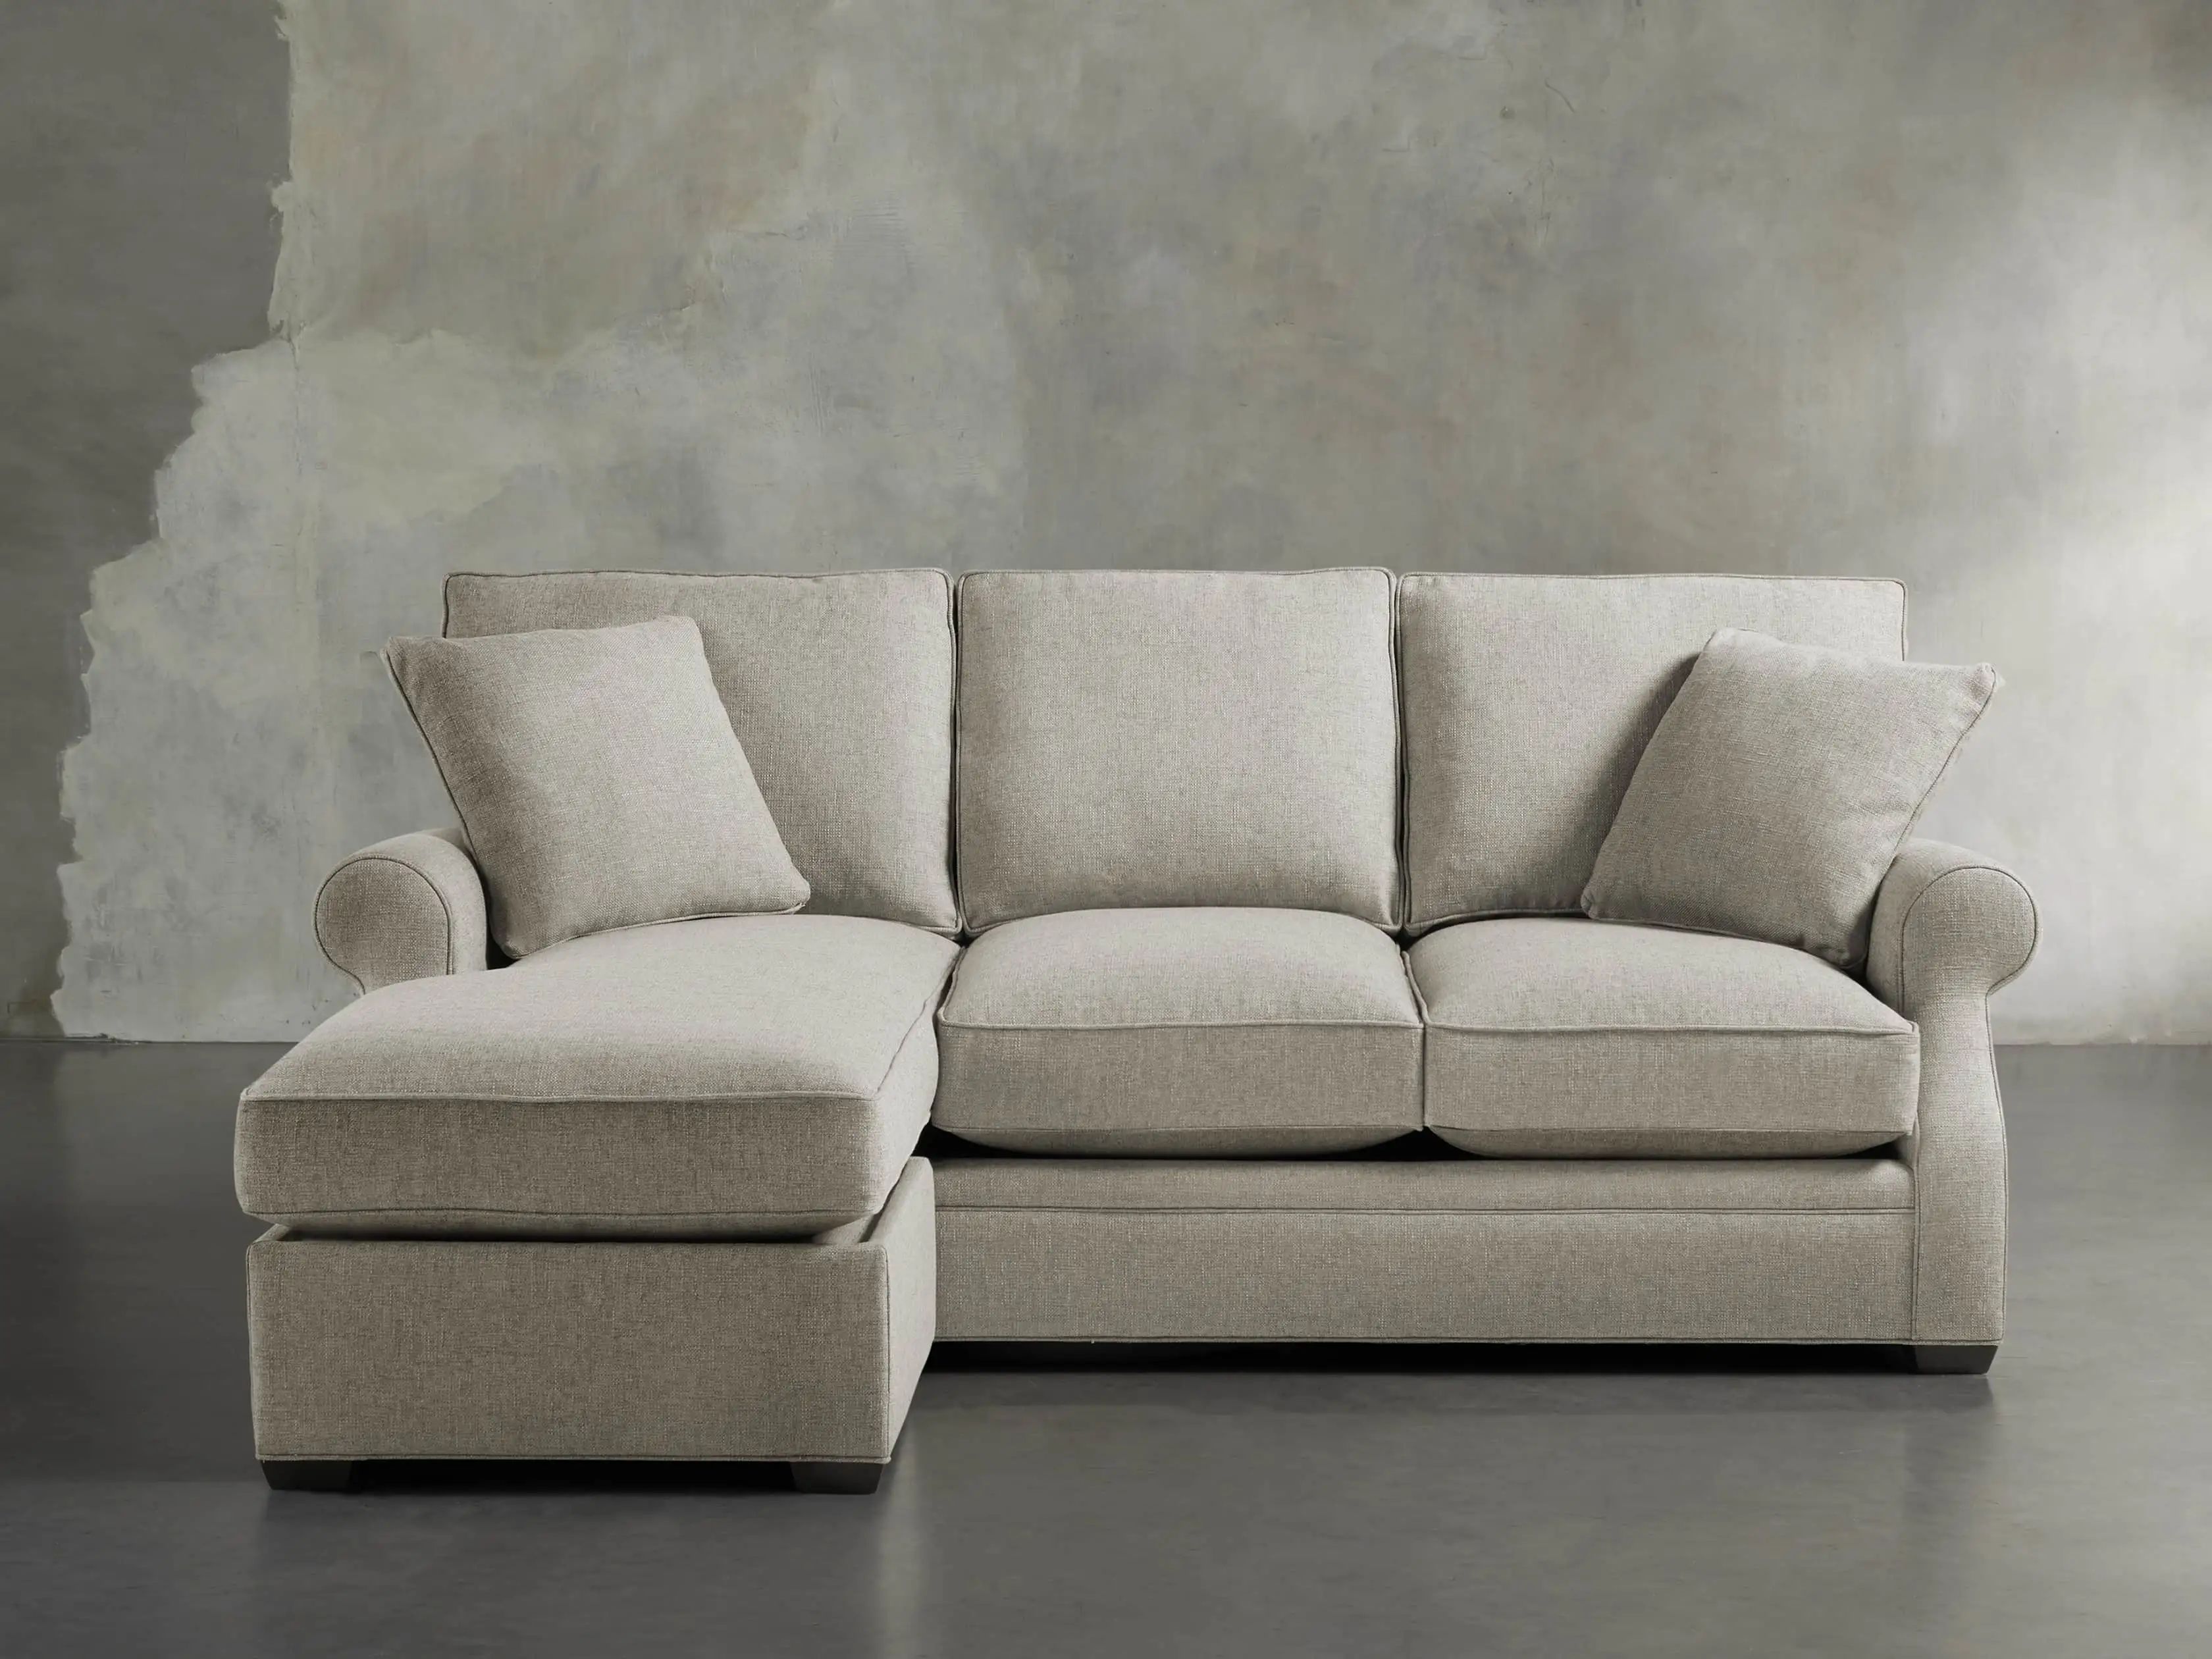 Landsbury 90"" Upholstered Queen Sleeper Sofa With Chaise | Arhaus